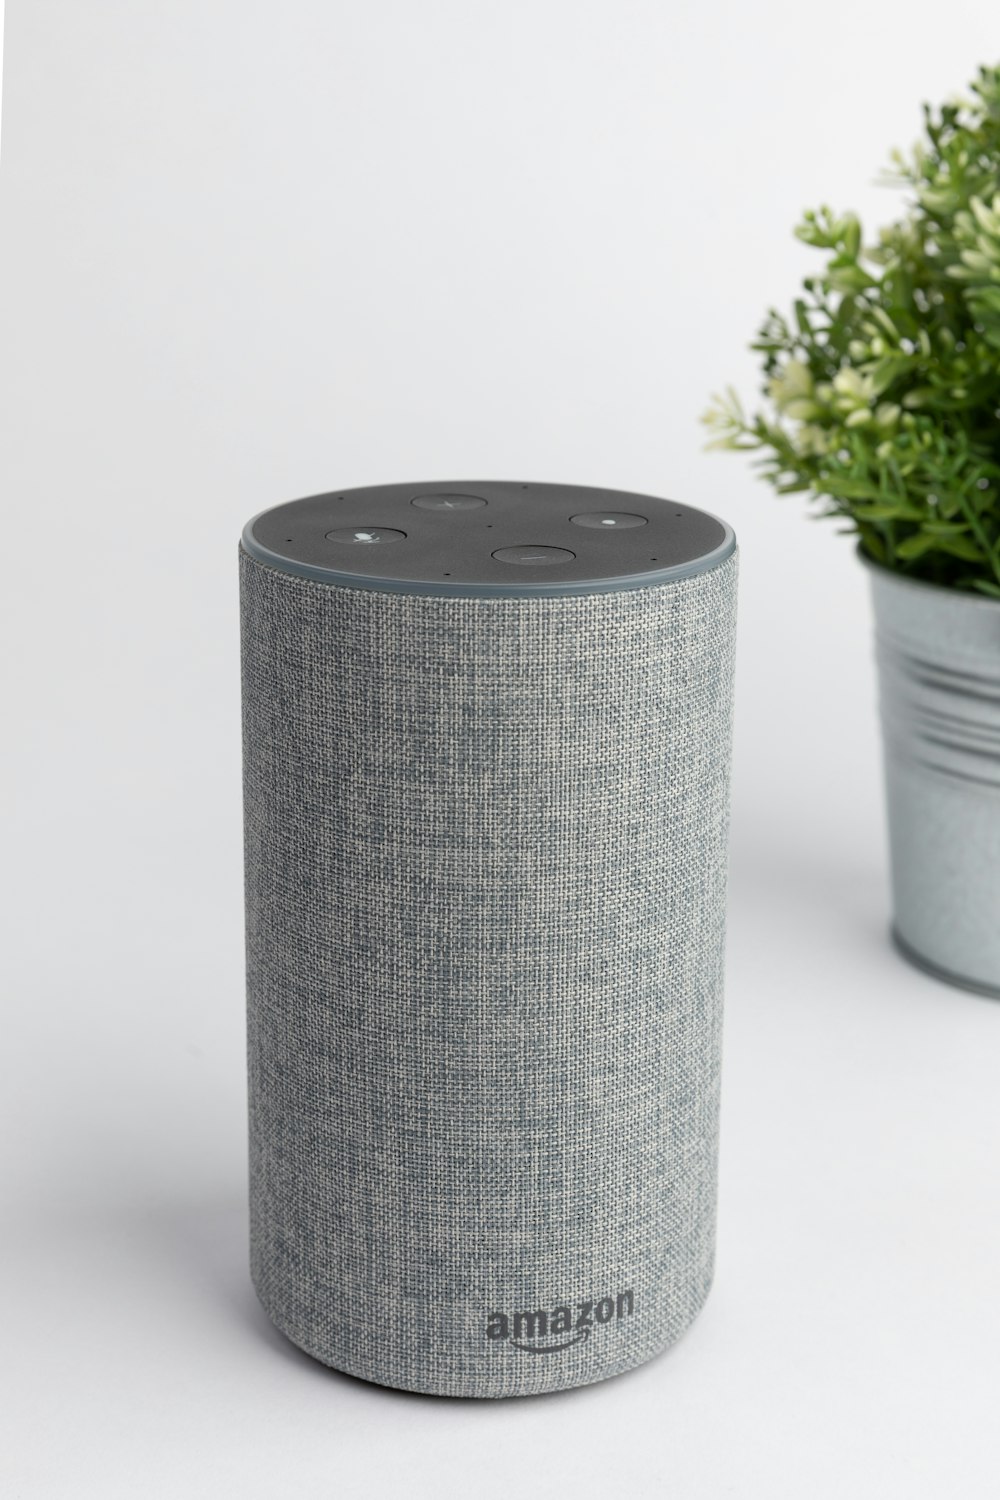 gray Amazon Echo portable speaker